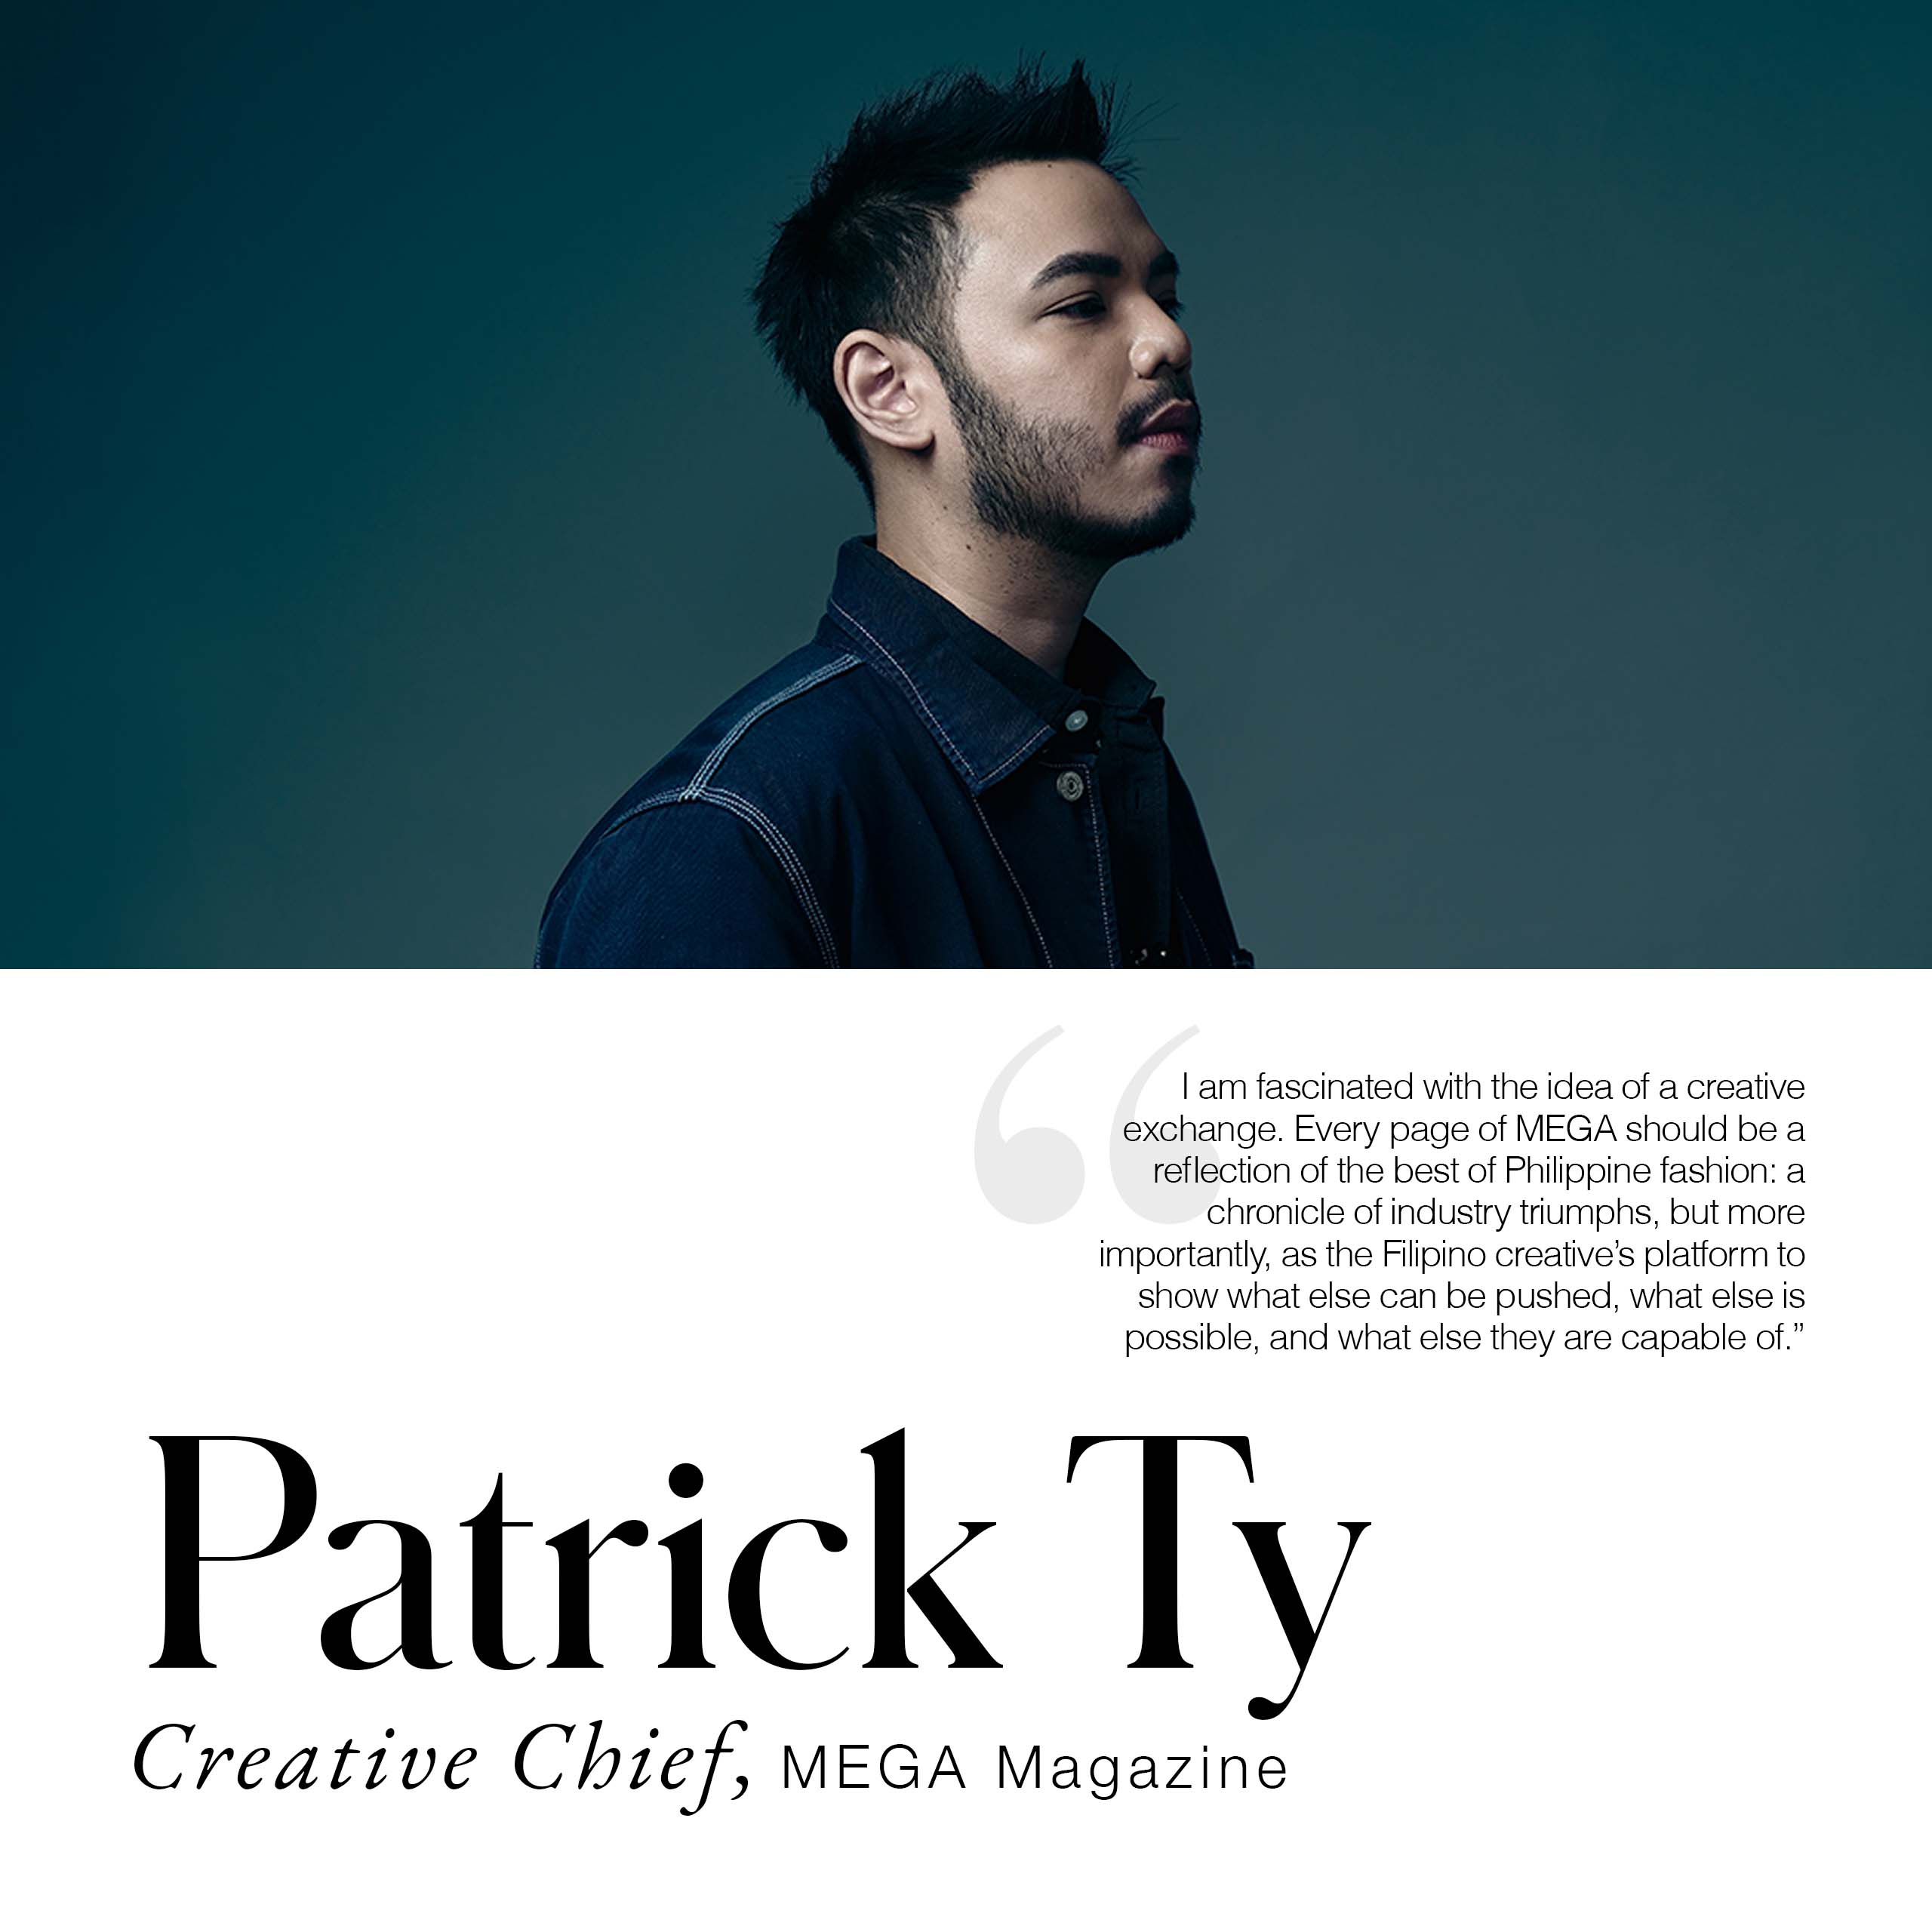 Patrick Ty is Ready to Push Boundaries as MEGA’s New Creative Chief